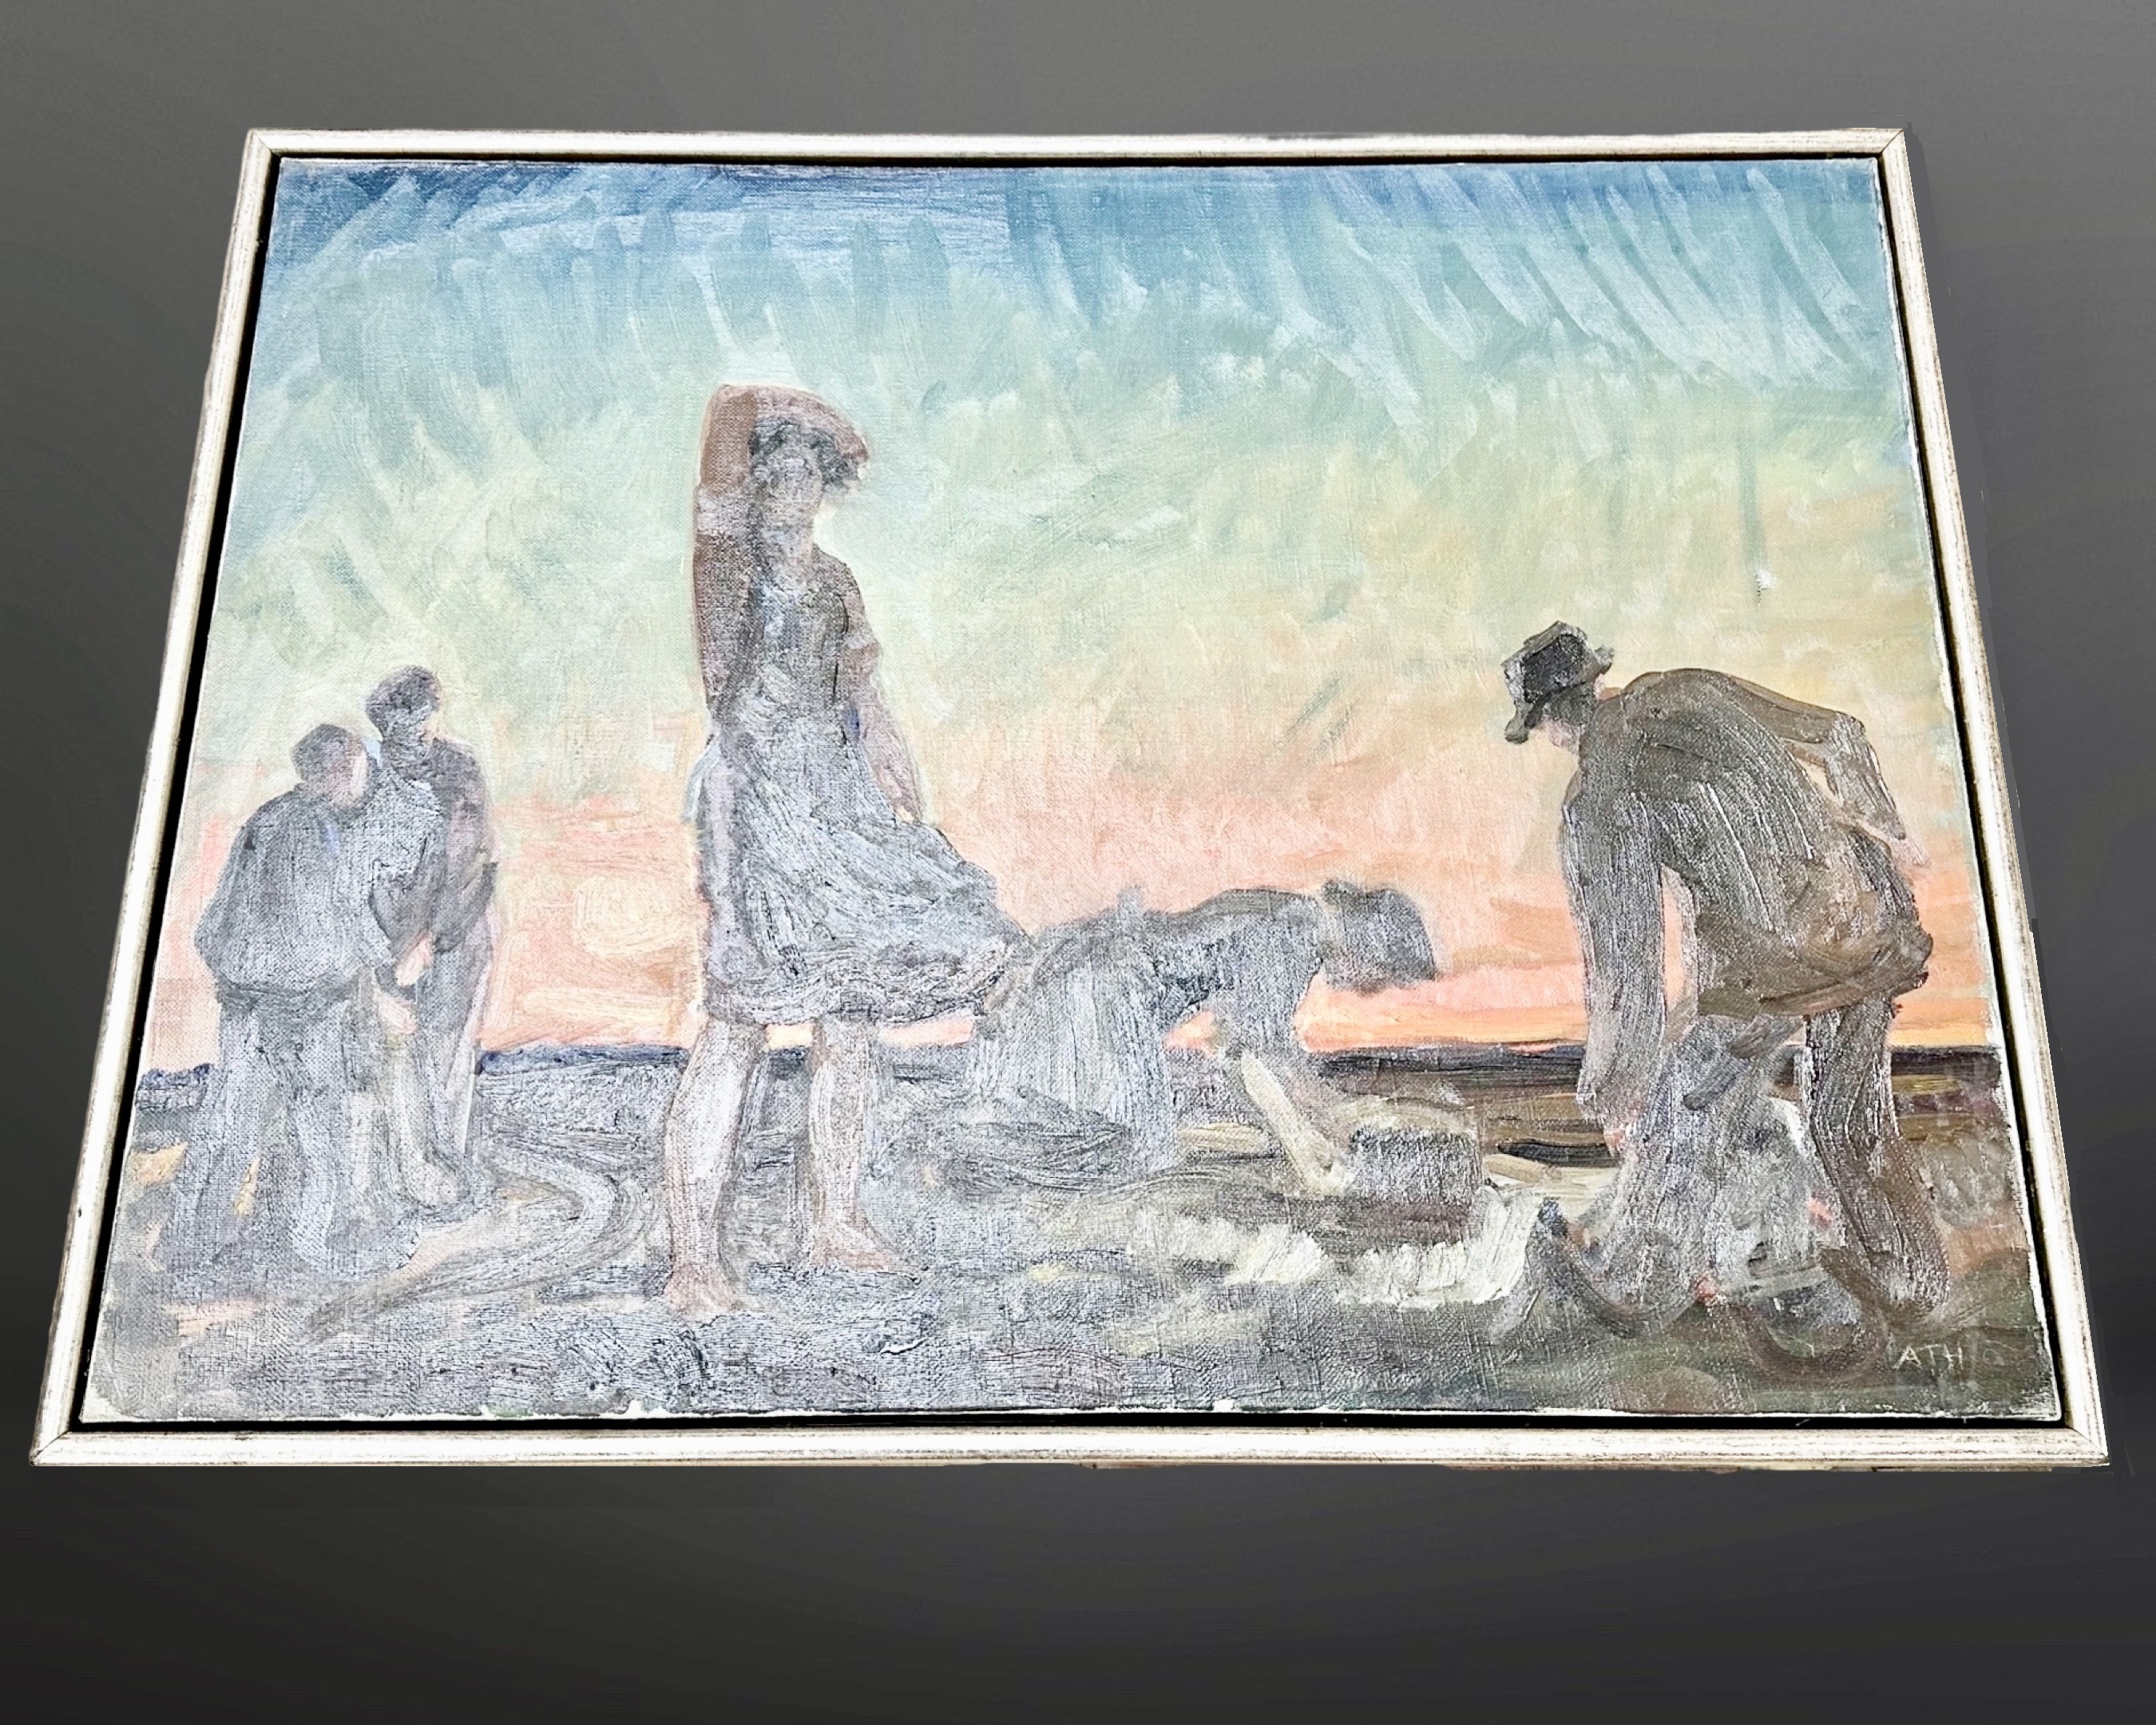 Twentieth century Continental School: Figures working, oil on canvas, 91 cm x 69 cm, framed.